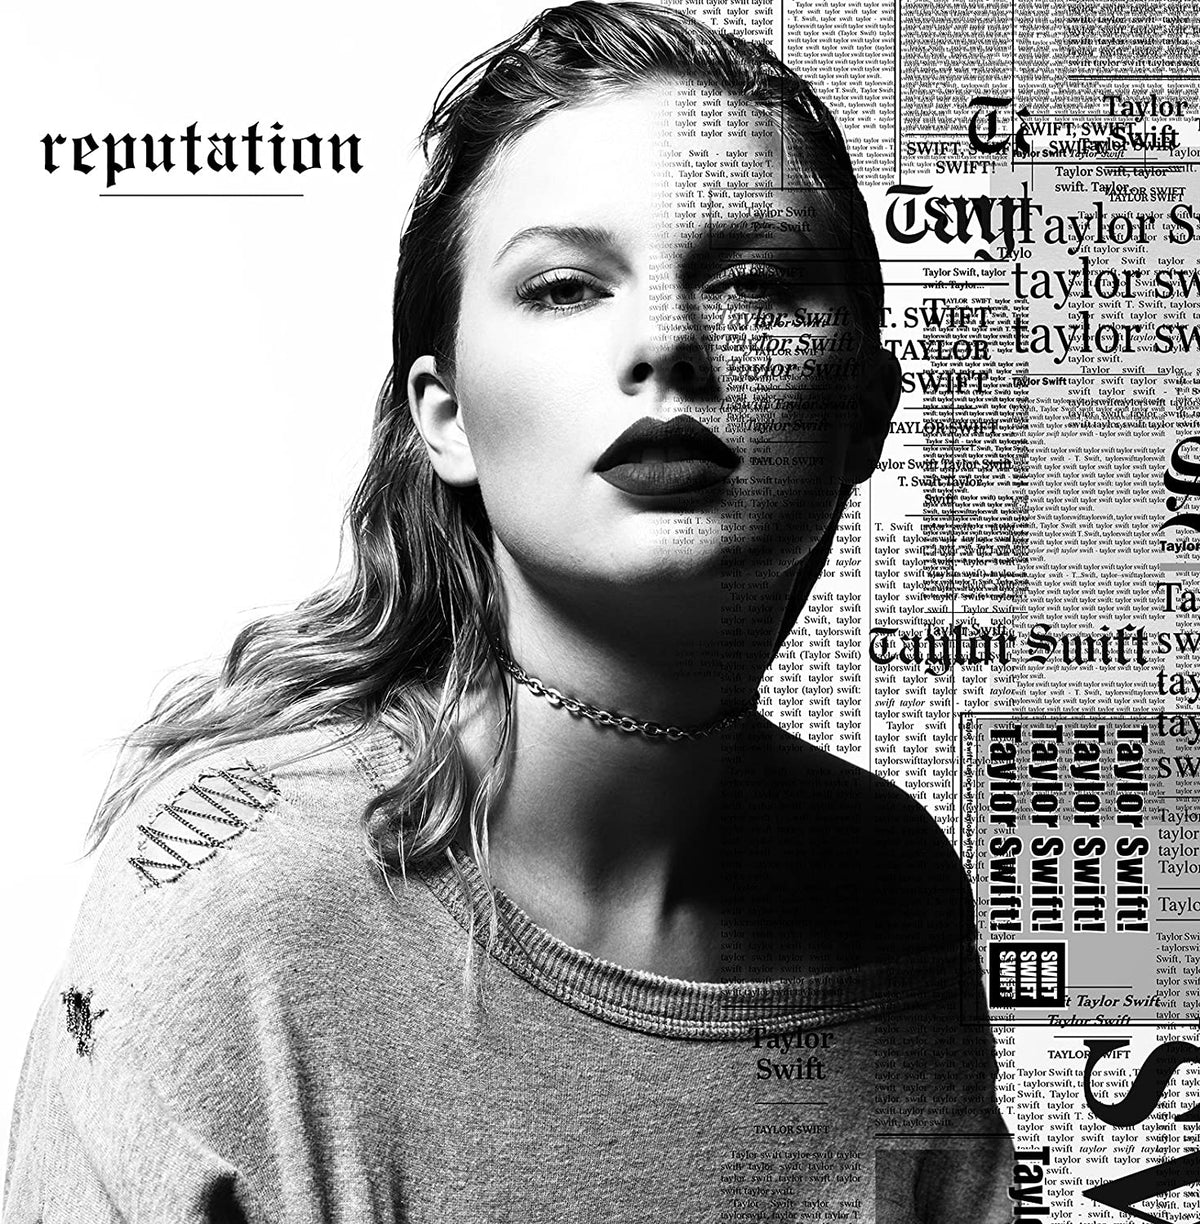 Taylor Swift - reputation (LP)